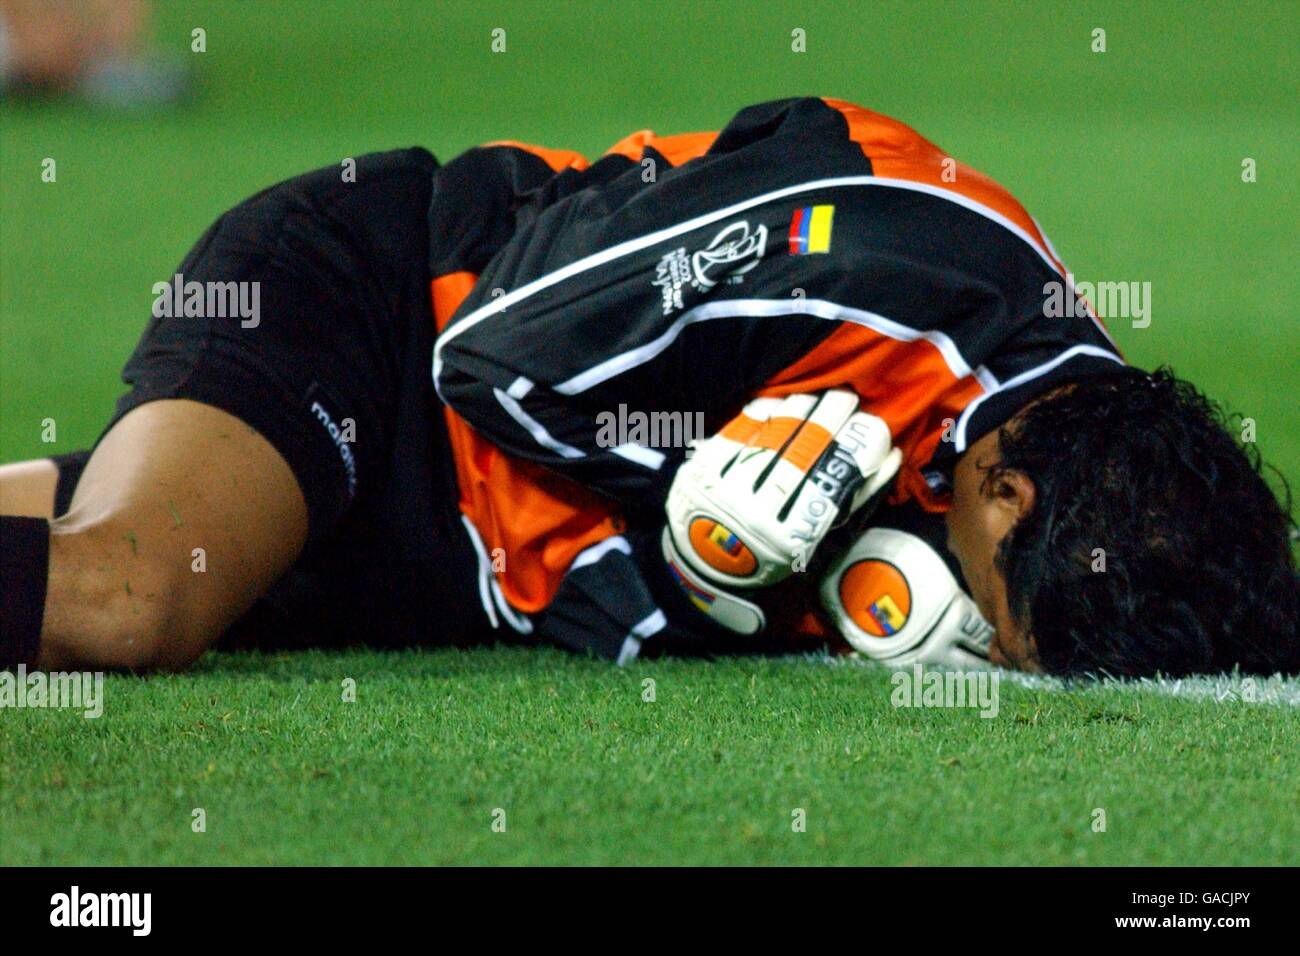 Soccer - FIFA World Cup 2002 - Group G - Ecuador v Croatia. Ecuador's goalkeeper Jose Cevallos lies in agony after a late challenge Stock Photo